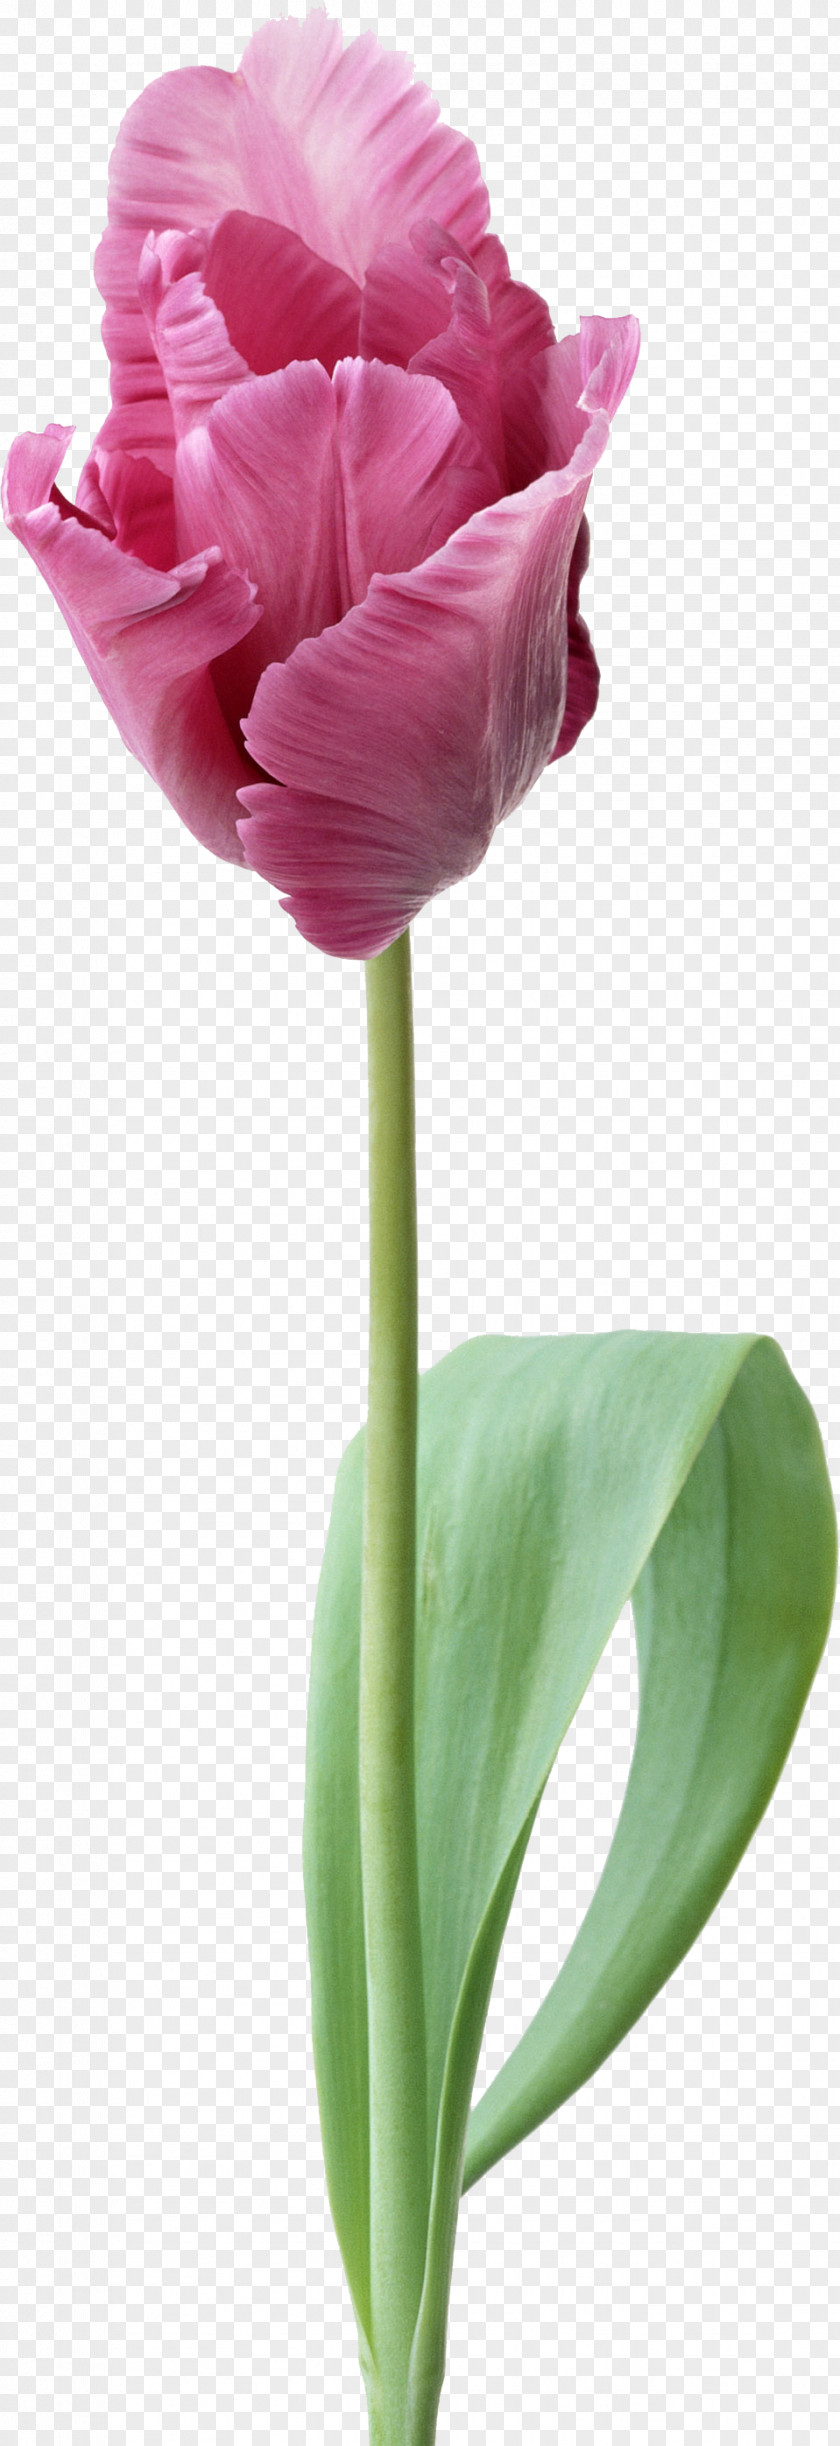 Tulips Painting Desktop Wallpaper Flower Drawing PNG